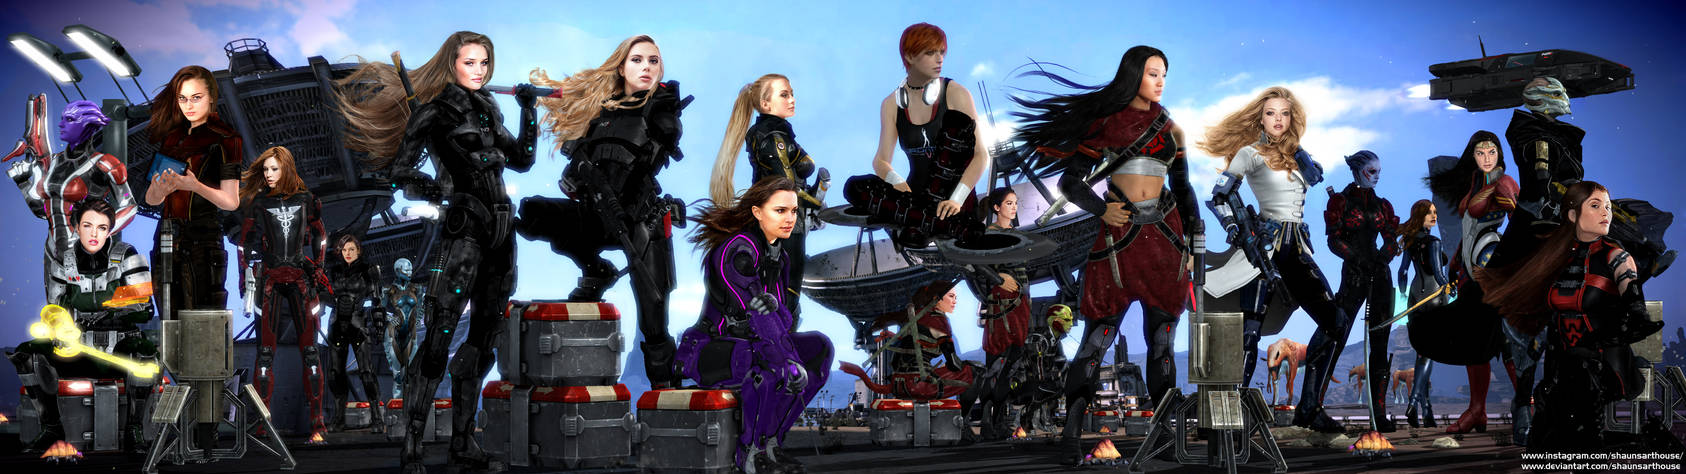 Mass Effect Occitania: The Women of Occitania